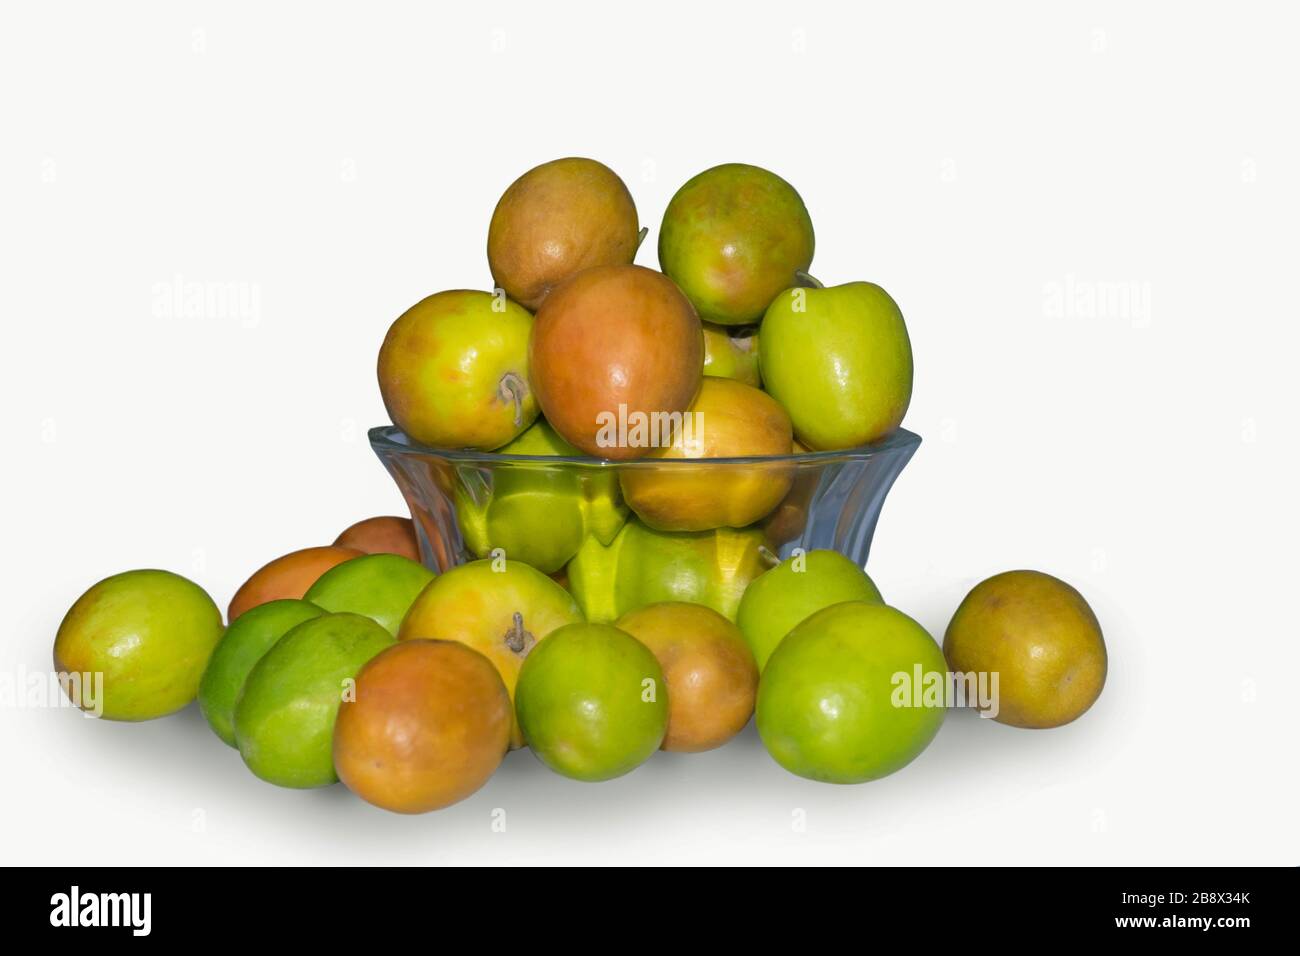 Close up of pile of Chinese fruit Jujube, Ziziphus jujuba in a bowl on white background. Stock Photo